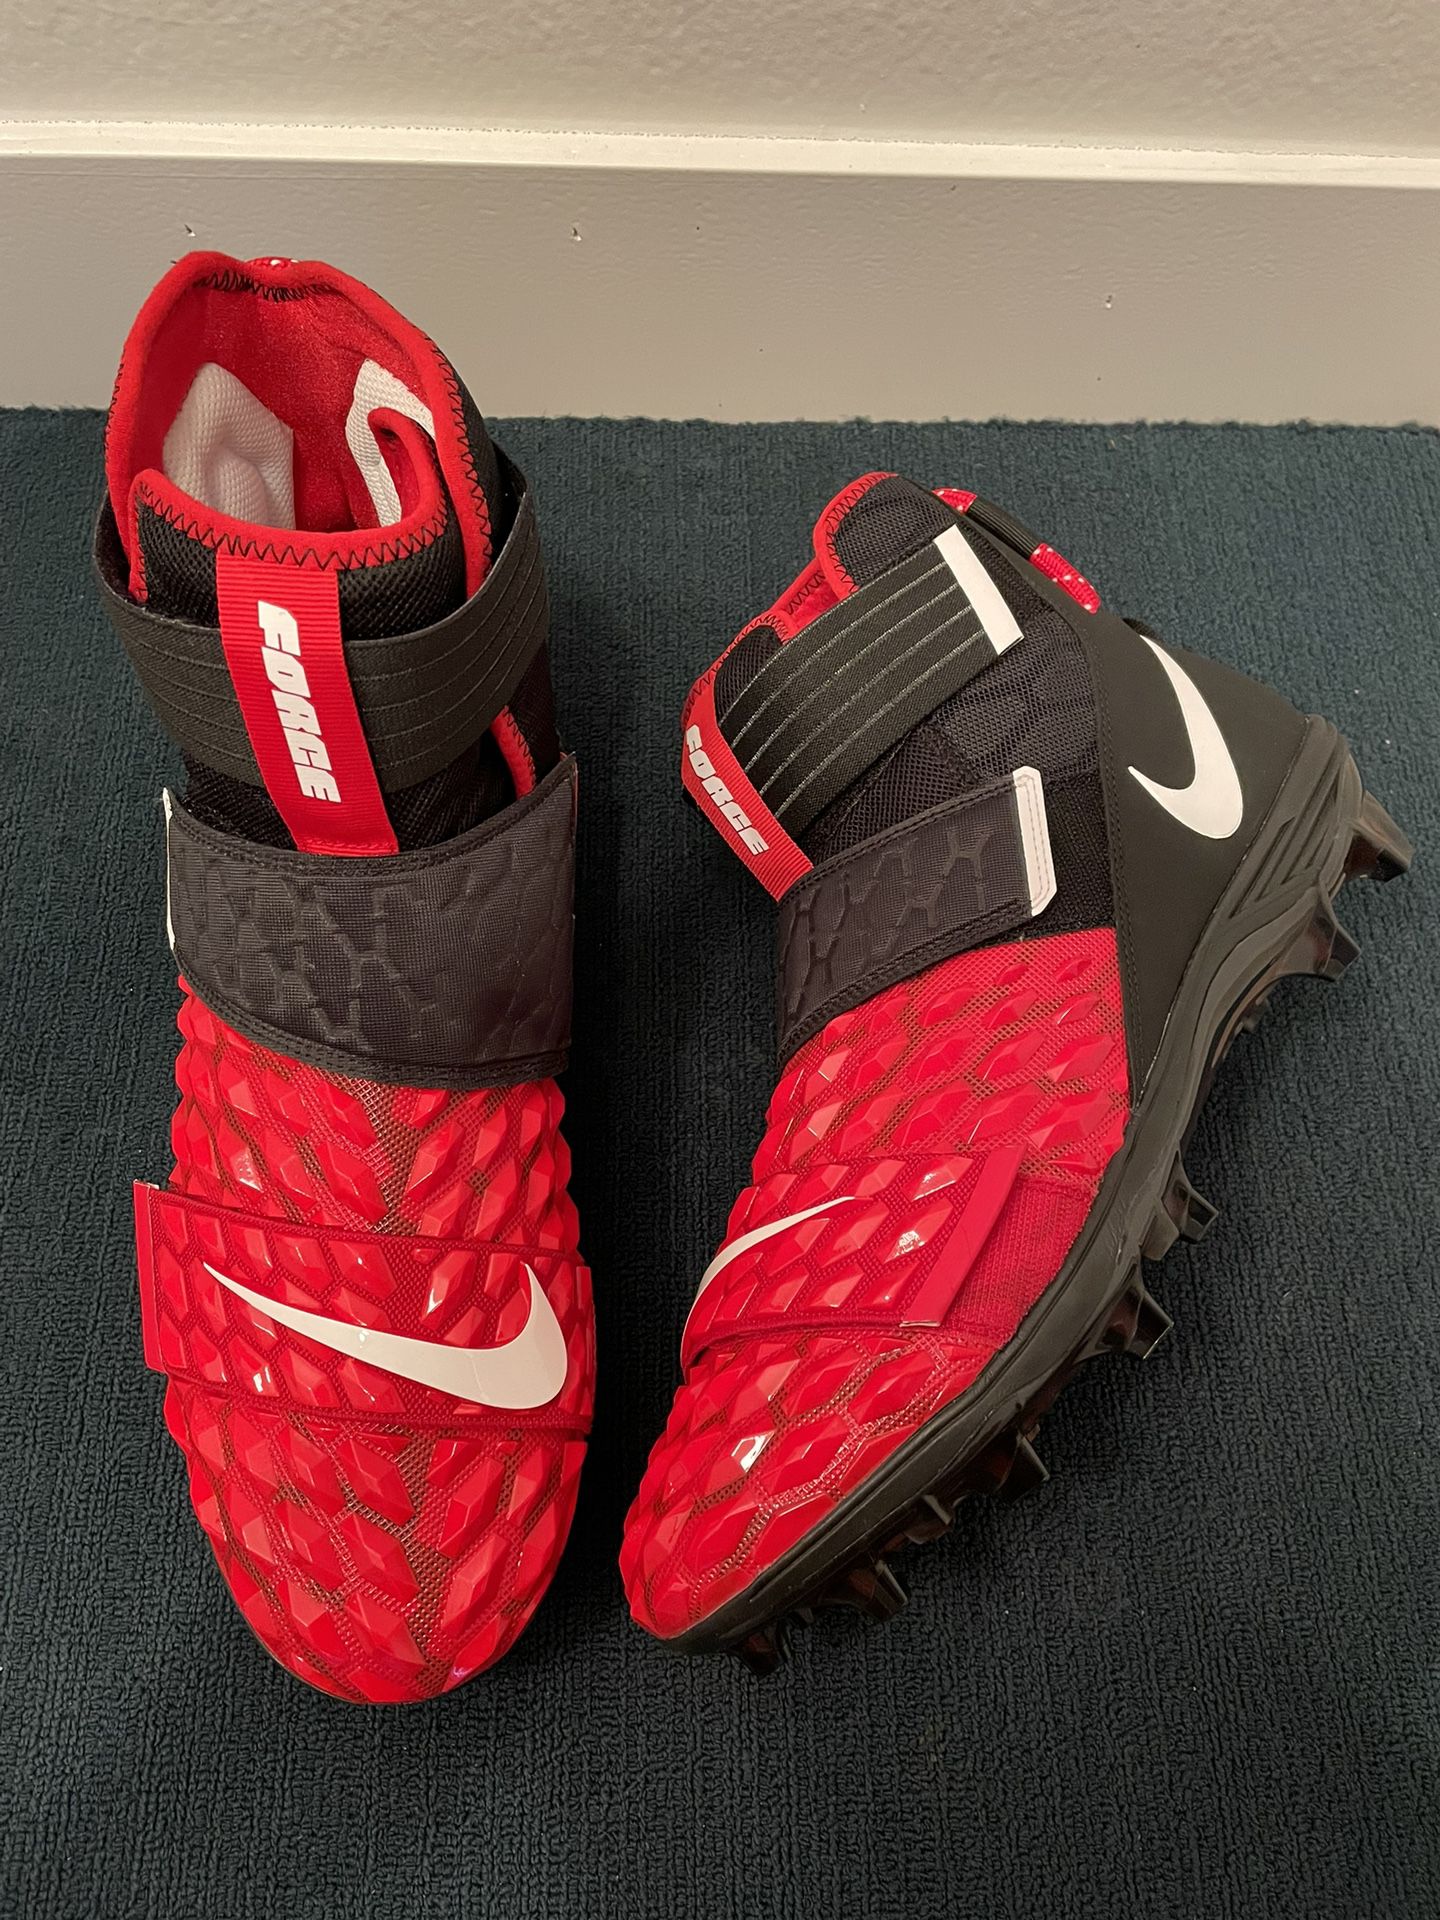 Nike Force Savage Elite 2 “Black Red University” Football Cleats Size 14